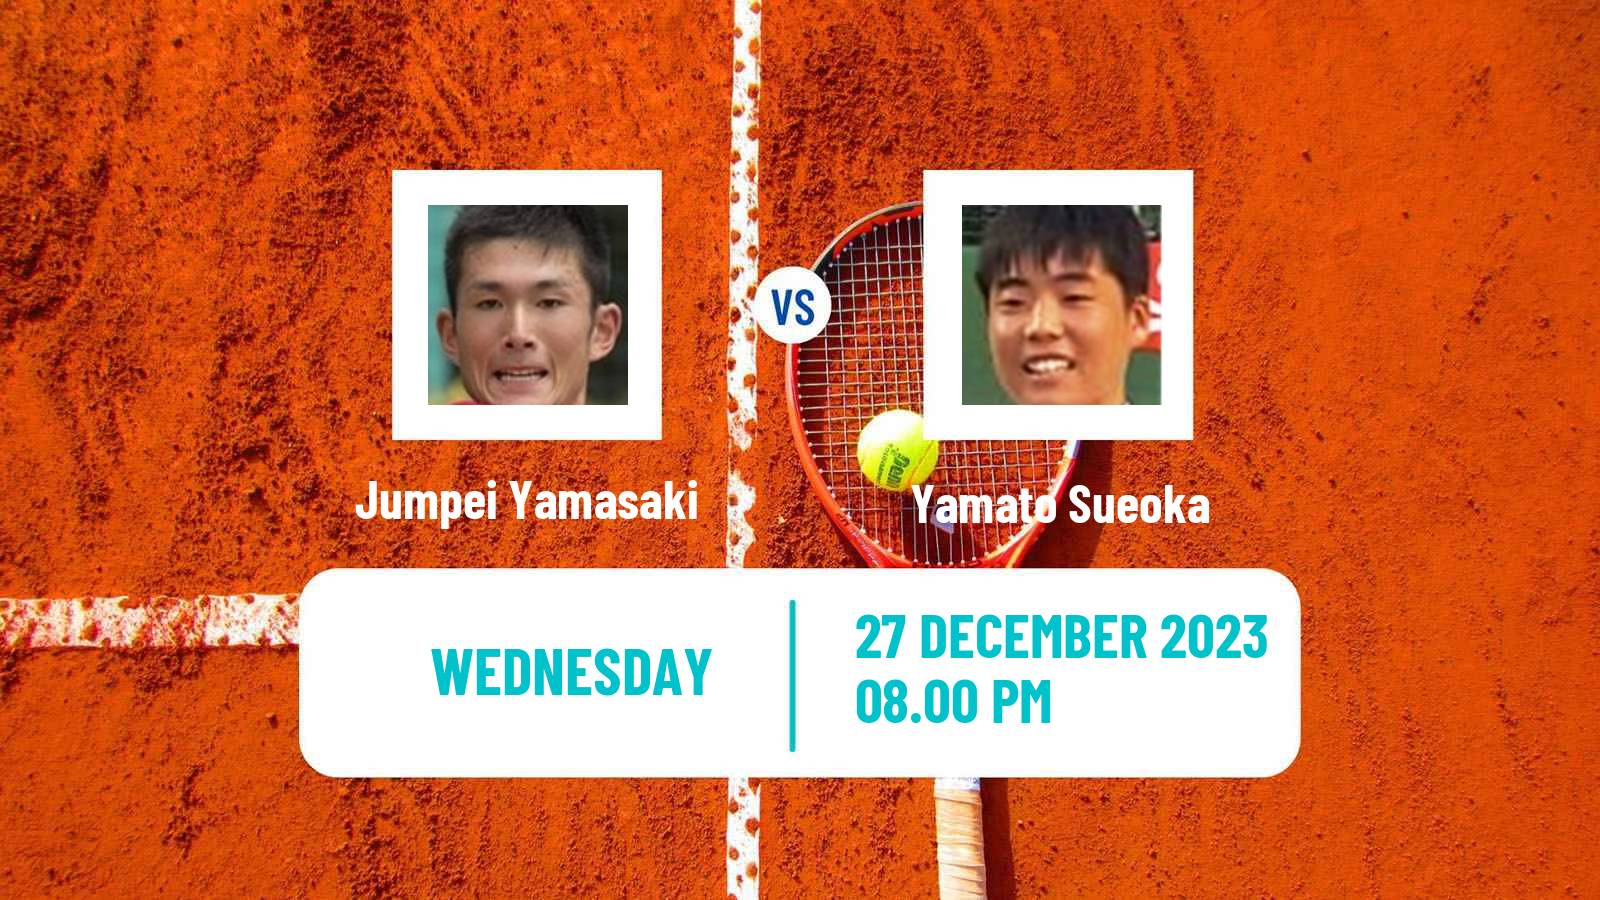 Tennis ITF M15 Yanagawa 2 Men Jumpei Yamasaki - Yamato Sueoka